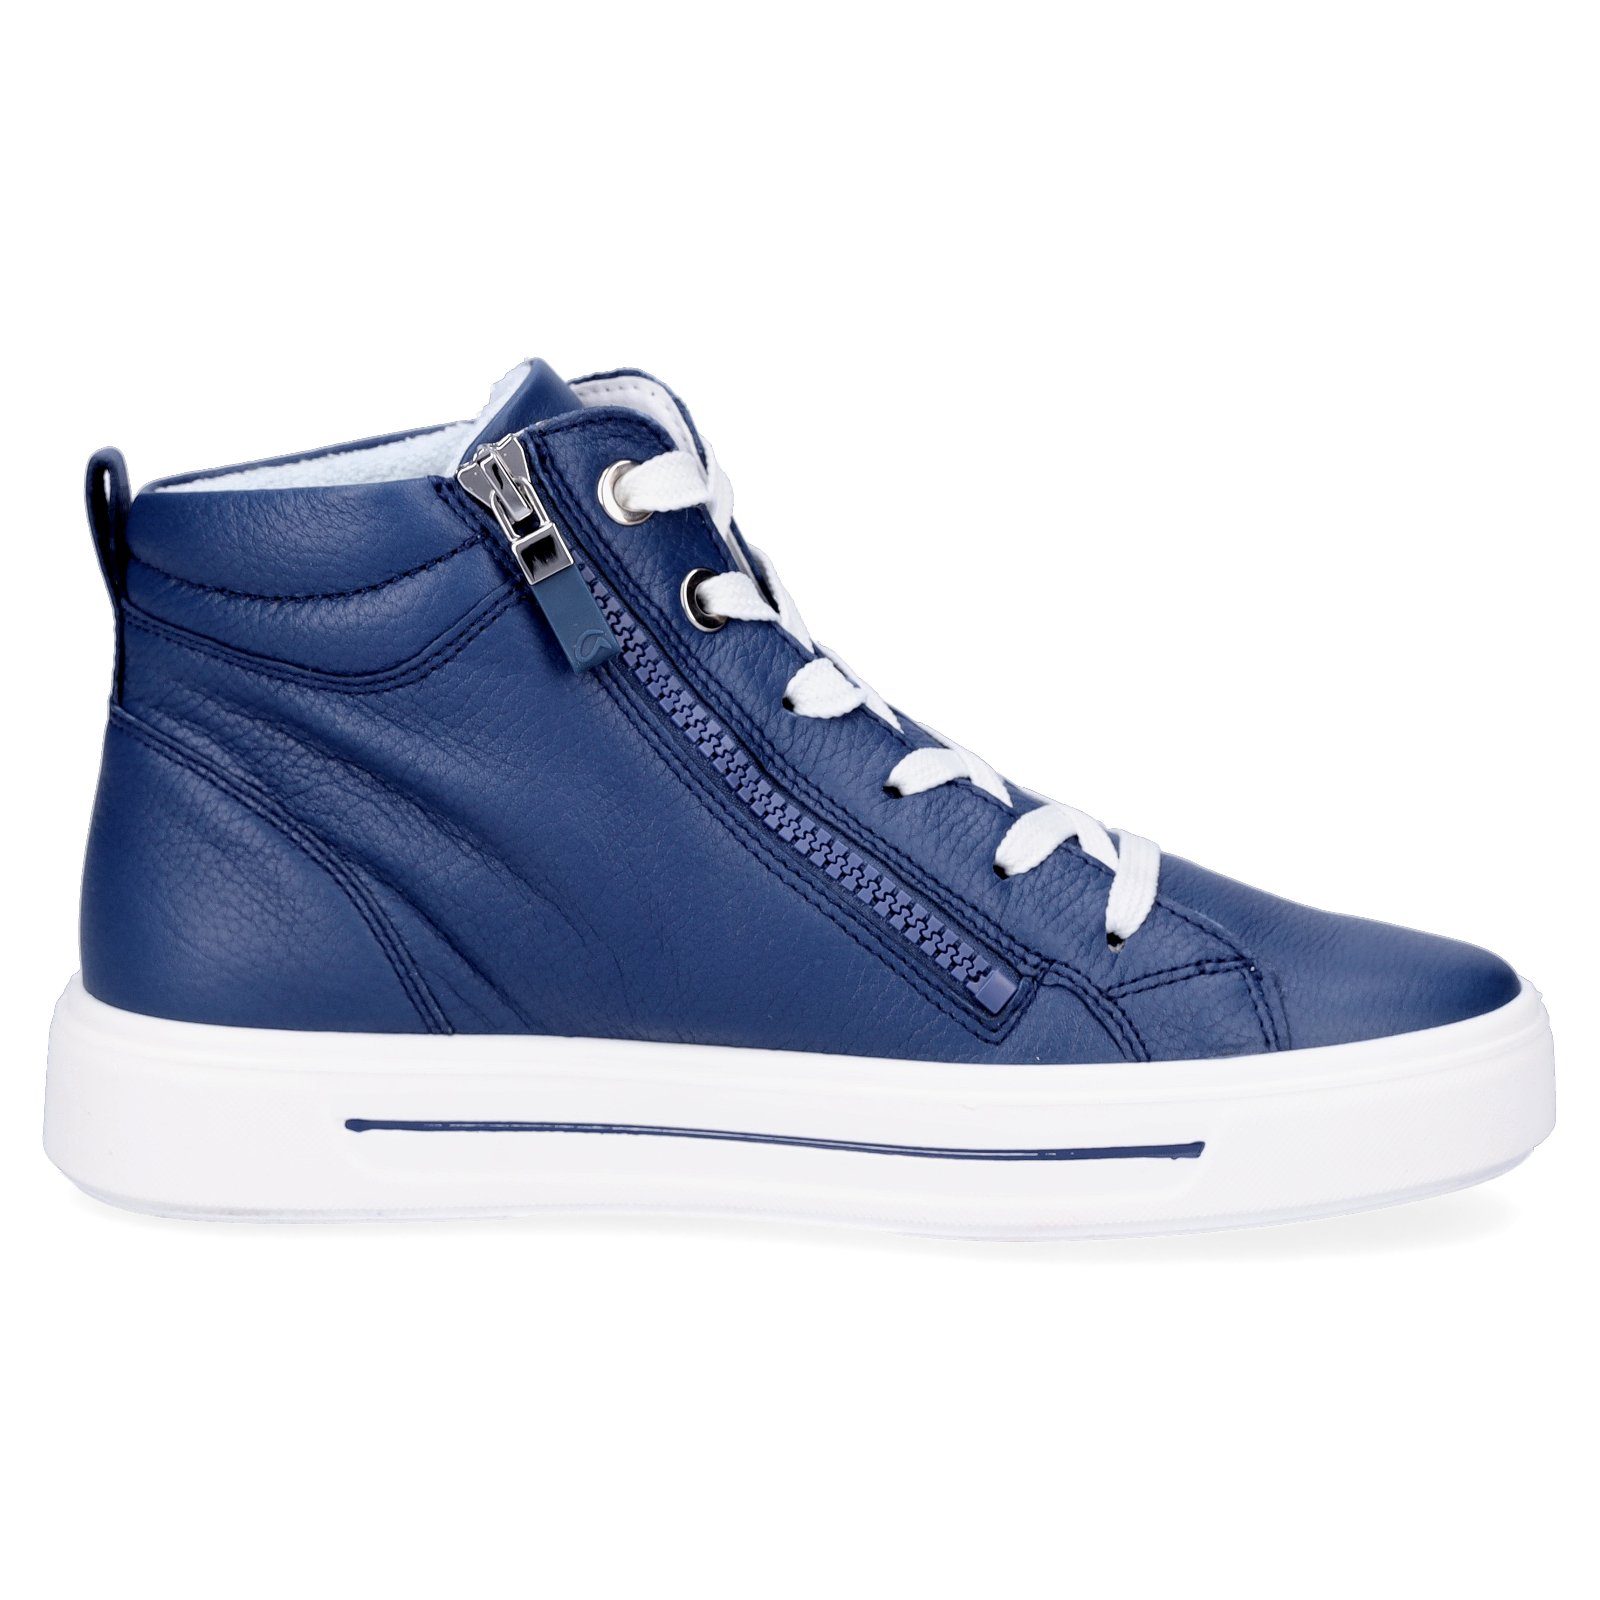 Ara Ara 048006 Leder blau Damen blau Sneaker High Sneaker